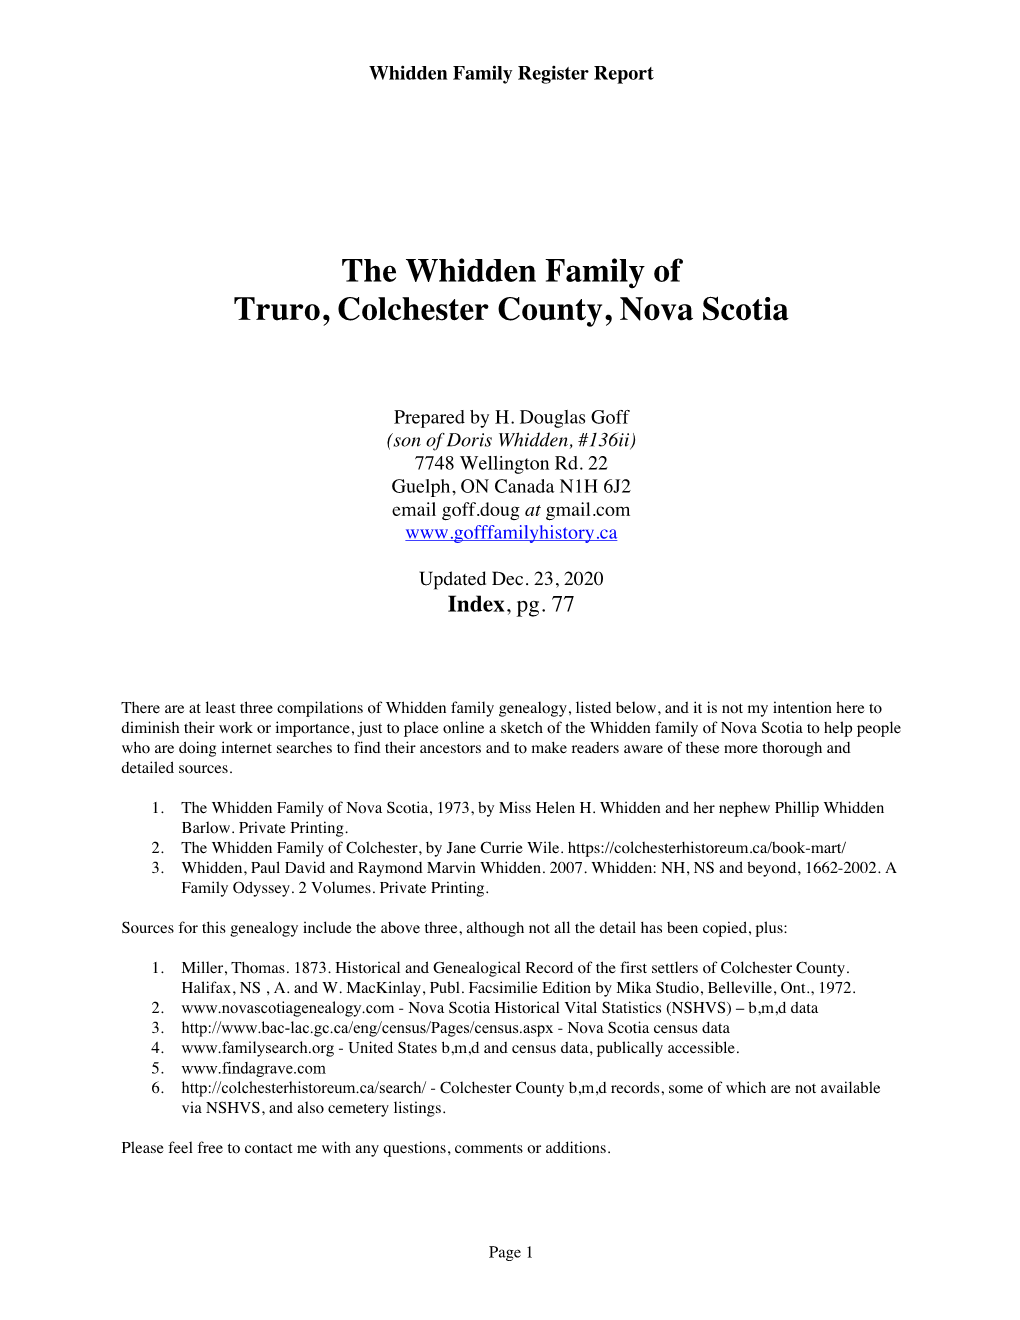 The Whidden Family of Truro, Colchester County, Nova Scotia